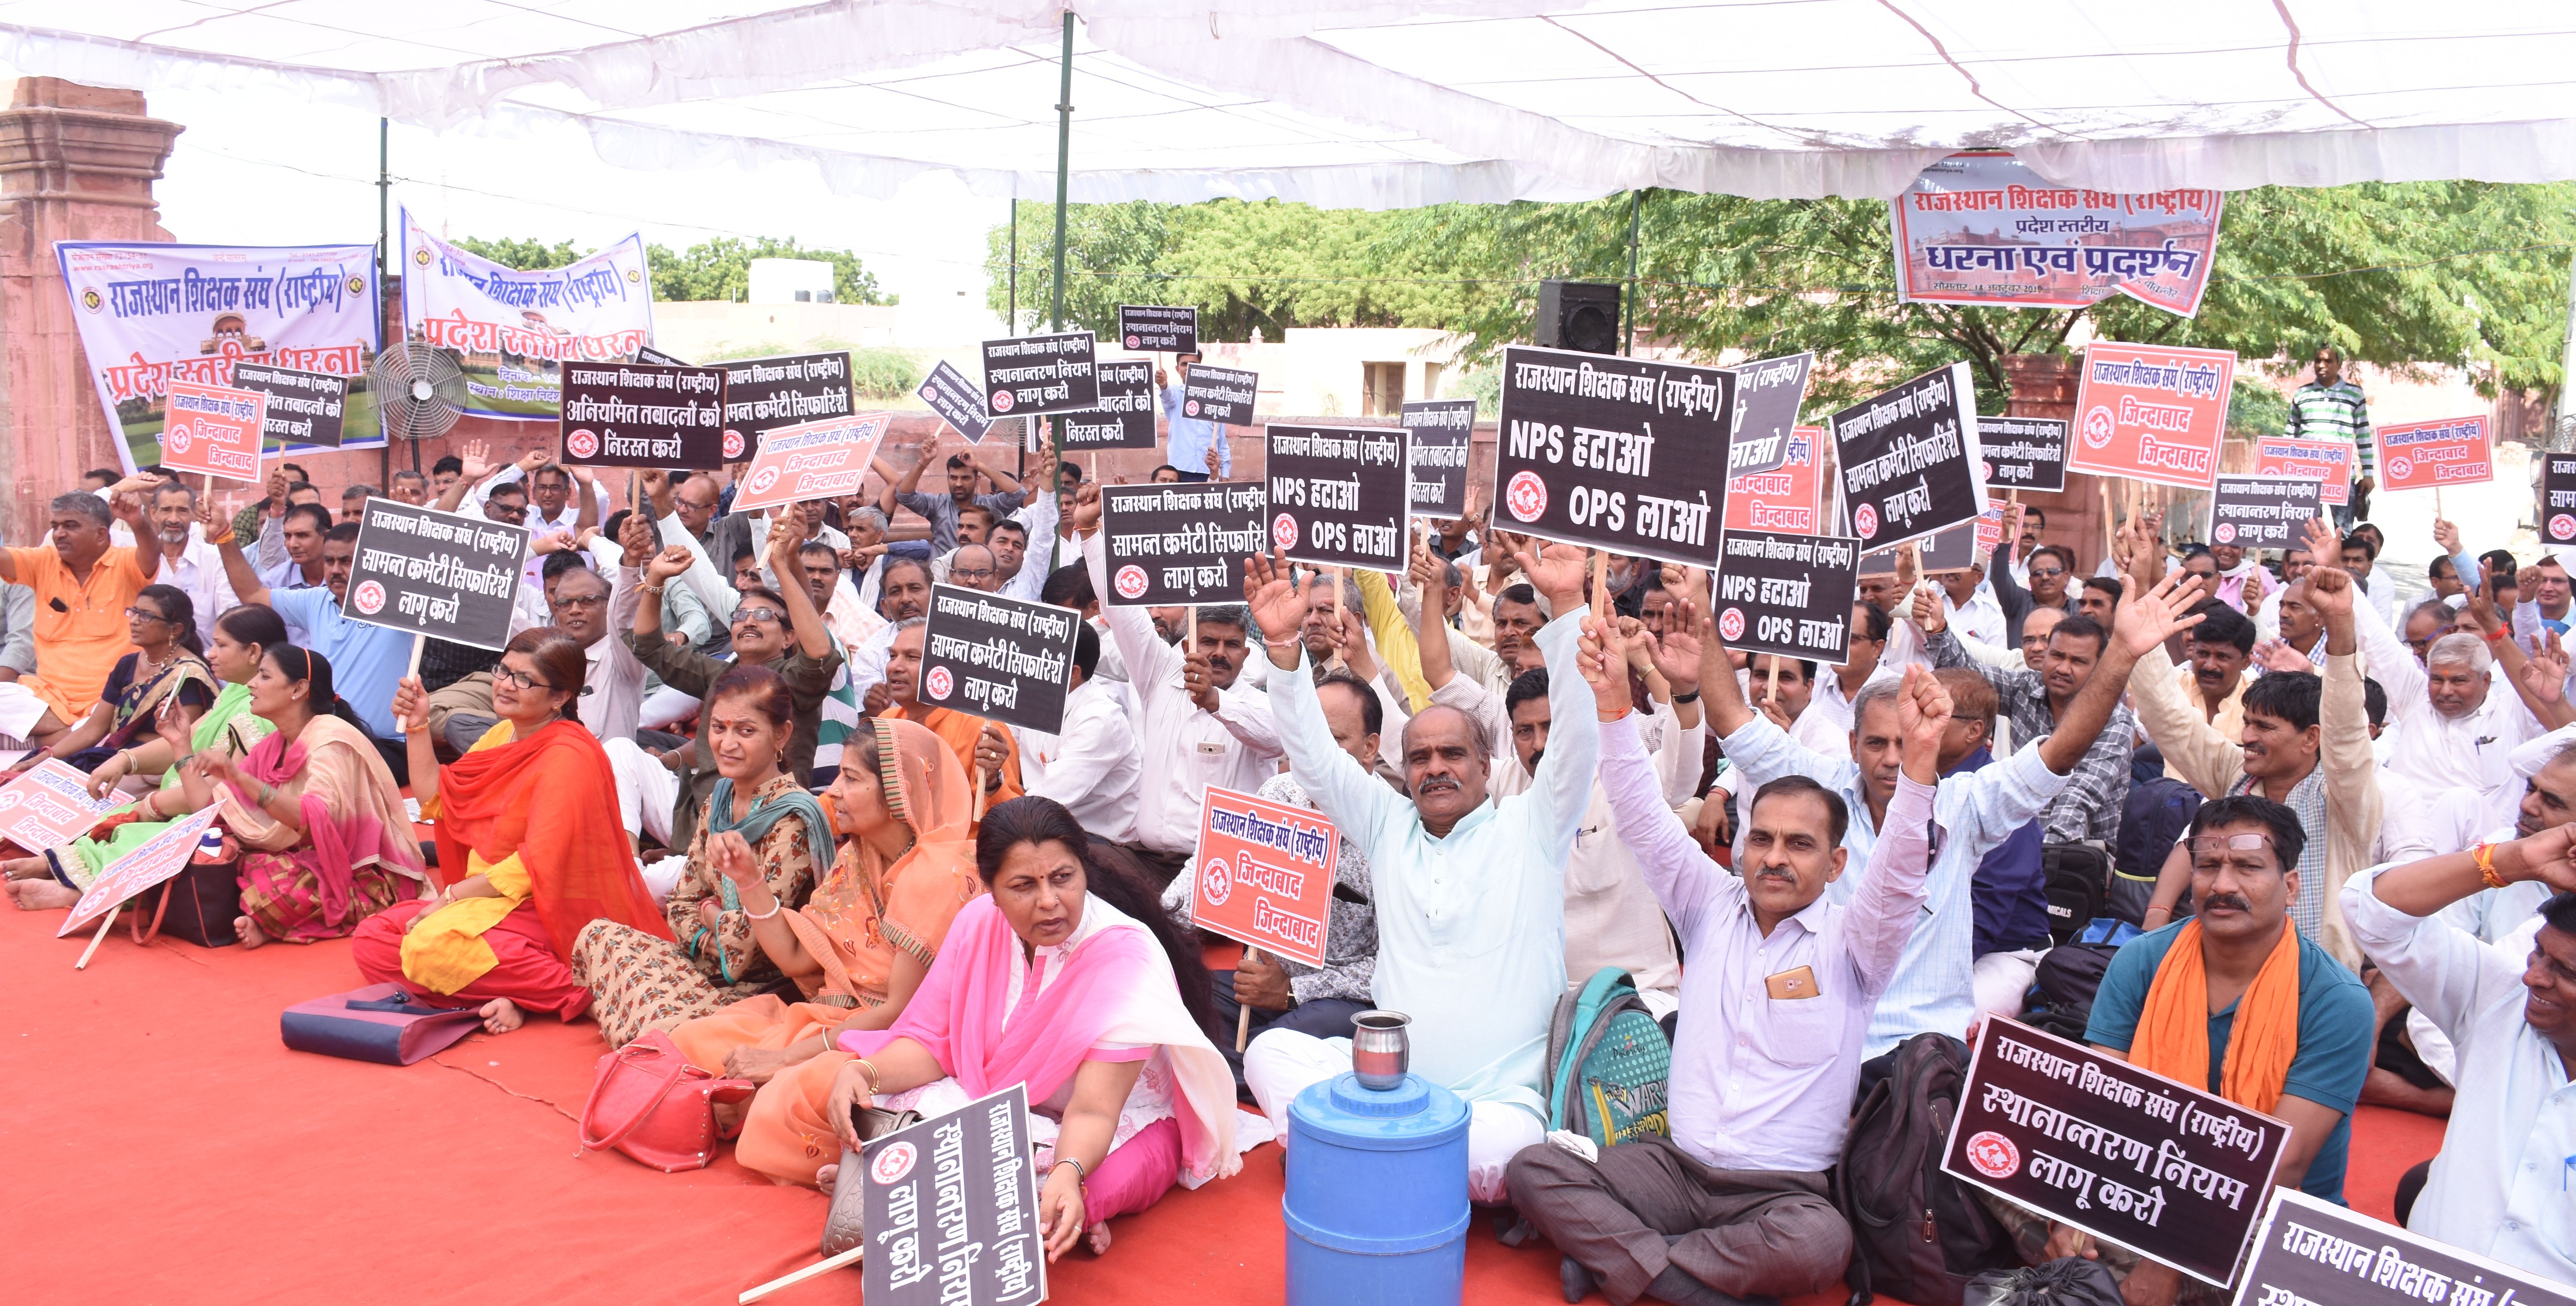 Rajasthan Teachers Association National protests in bikaner